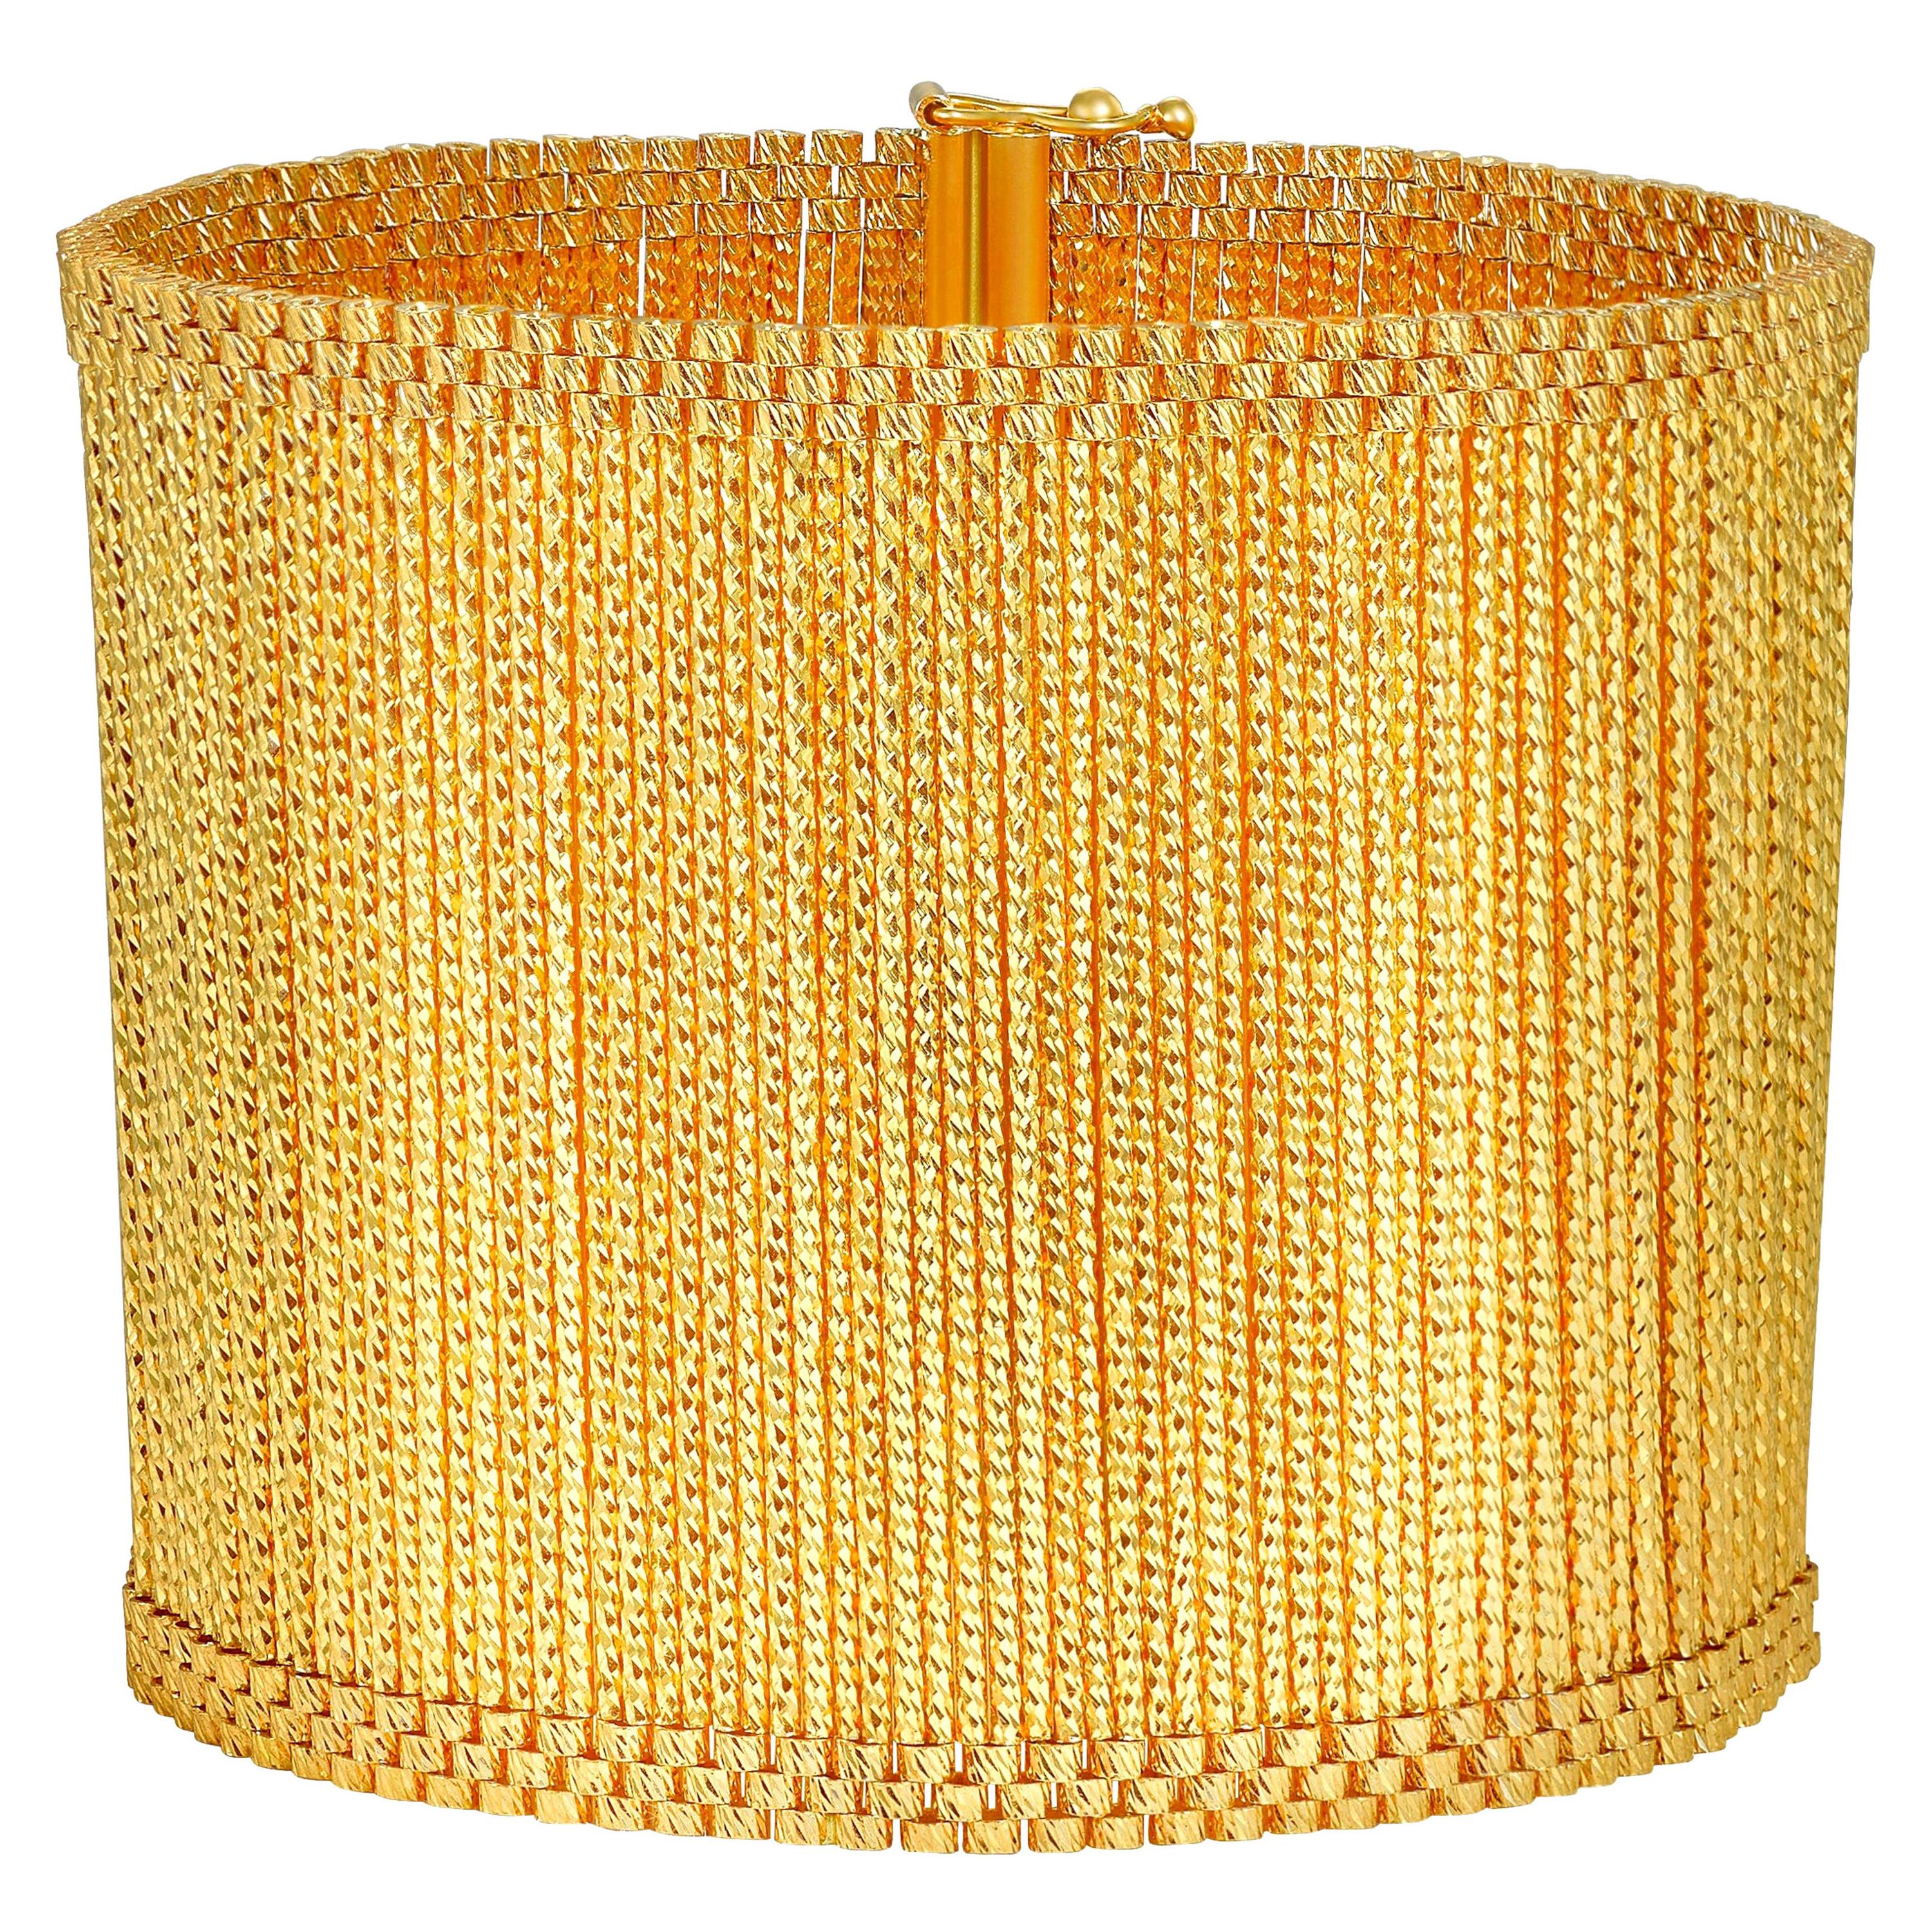 18 Karat Yellow Gold Cuff Bracelet